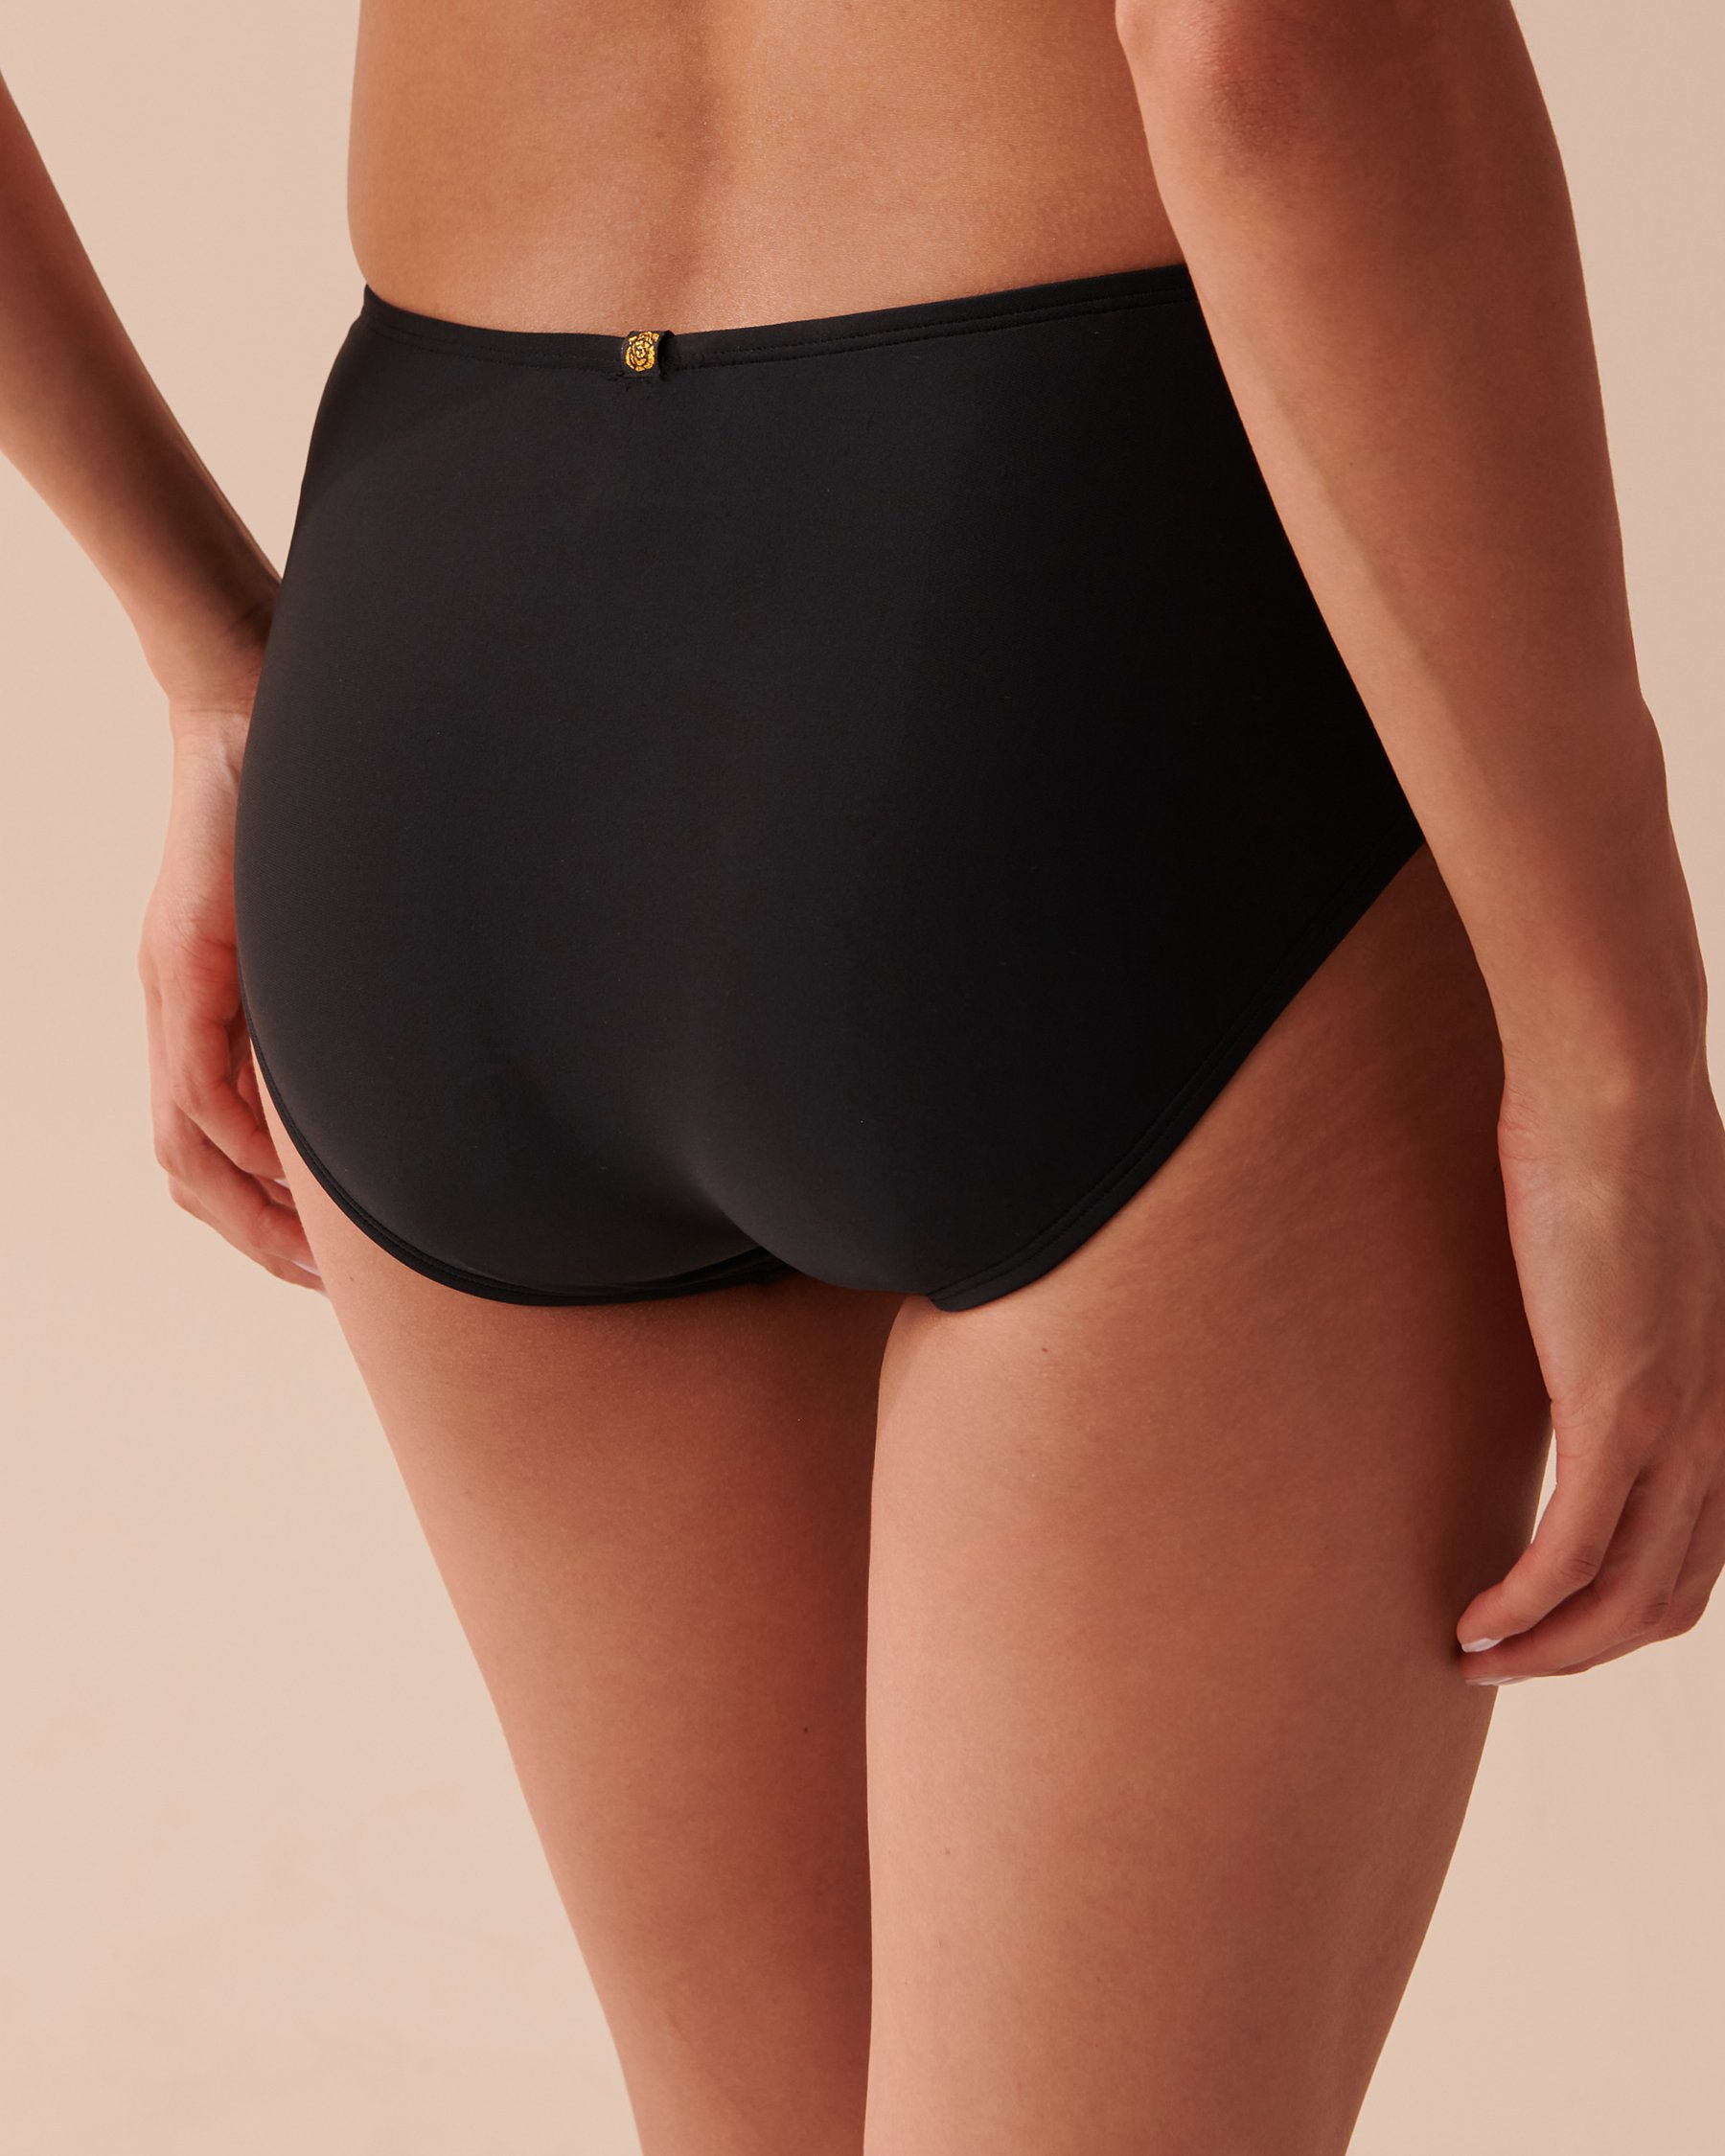 Aayomet Women High Waisted Bikini Bottoms High Cut Swim Bottom Full  Coverage Swimsuit Bottom Sports Long Swimming Pants for Men,Black XX-Large